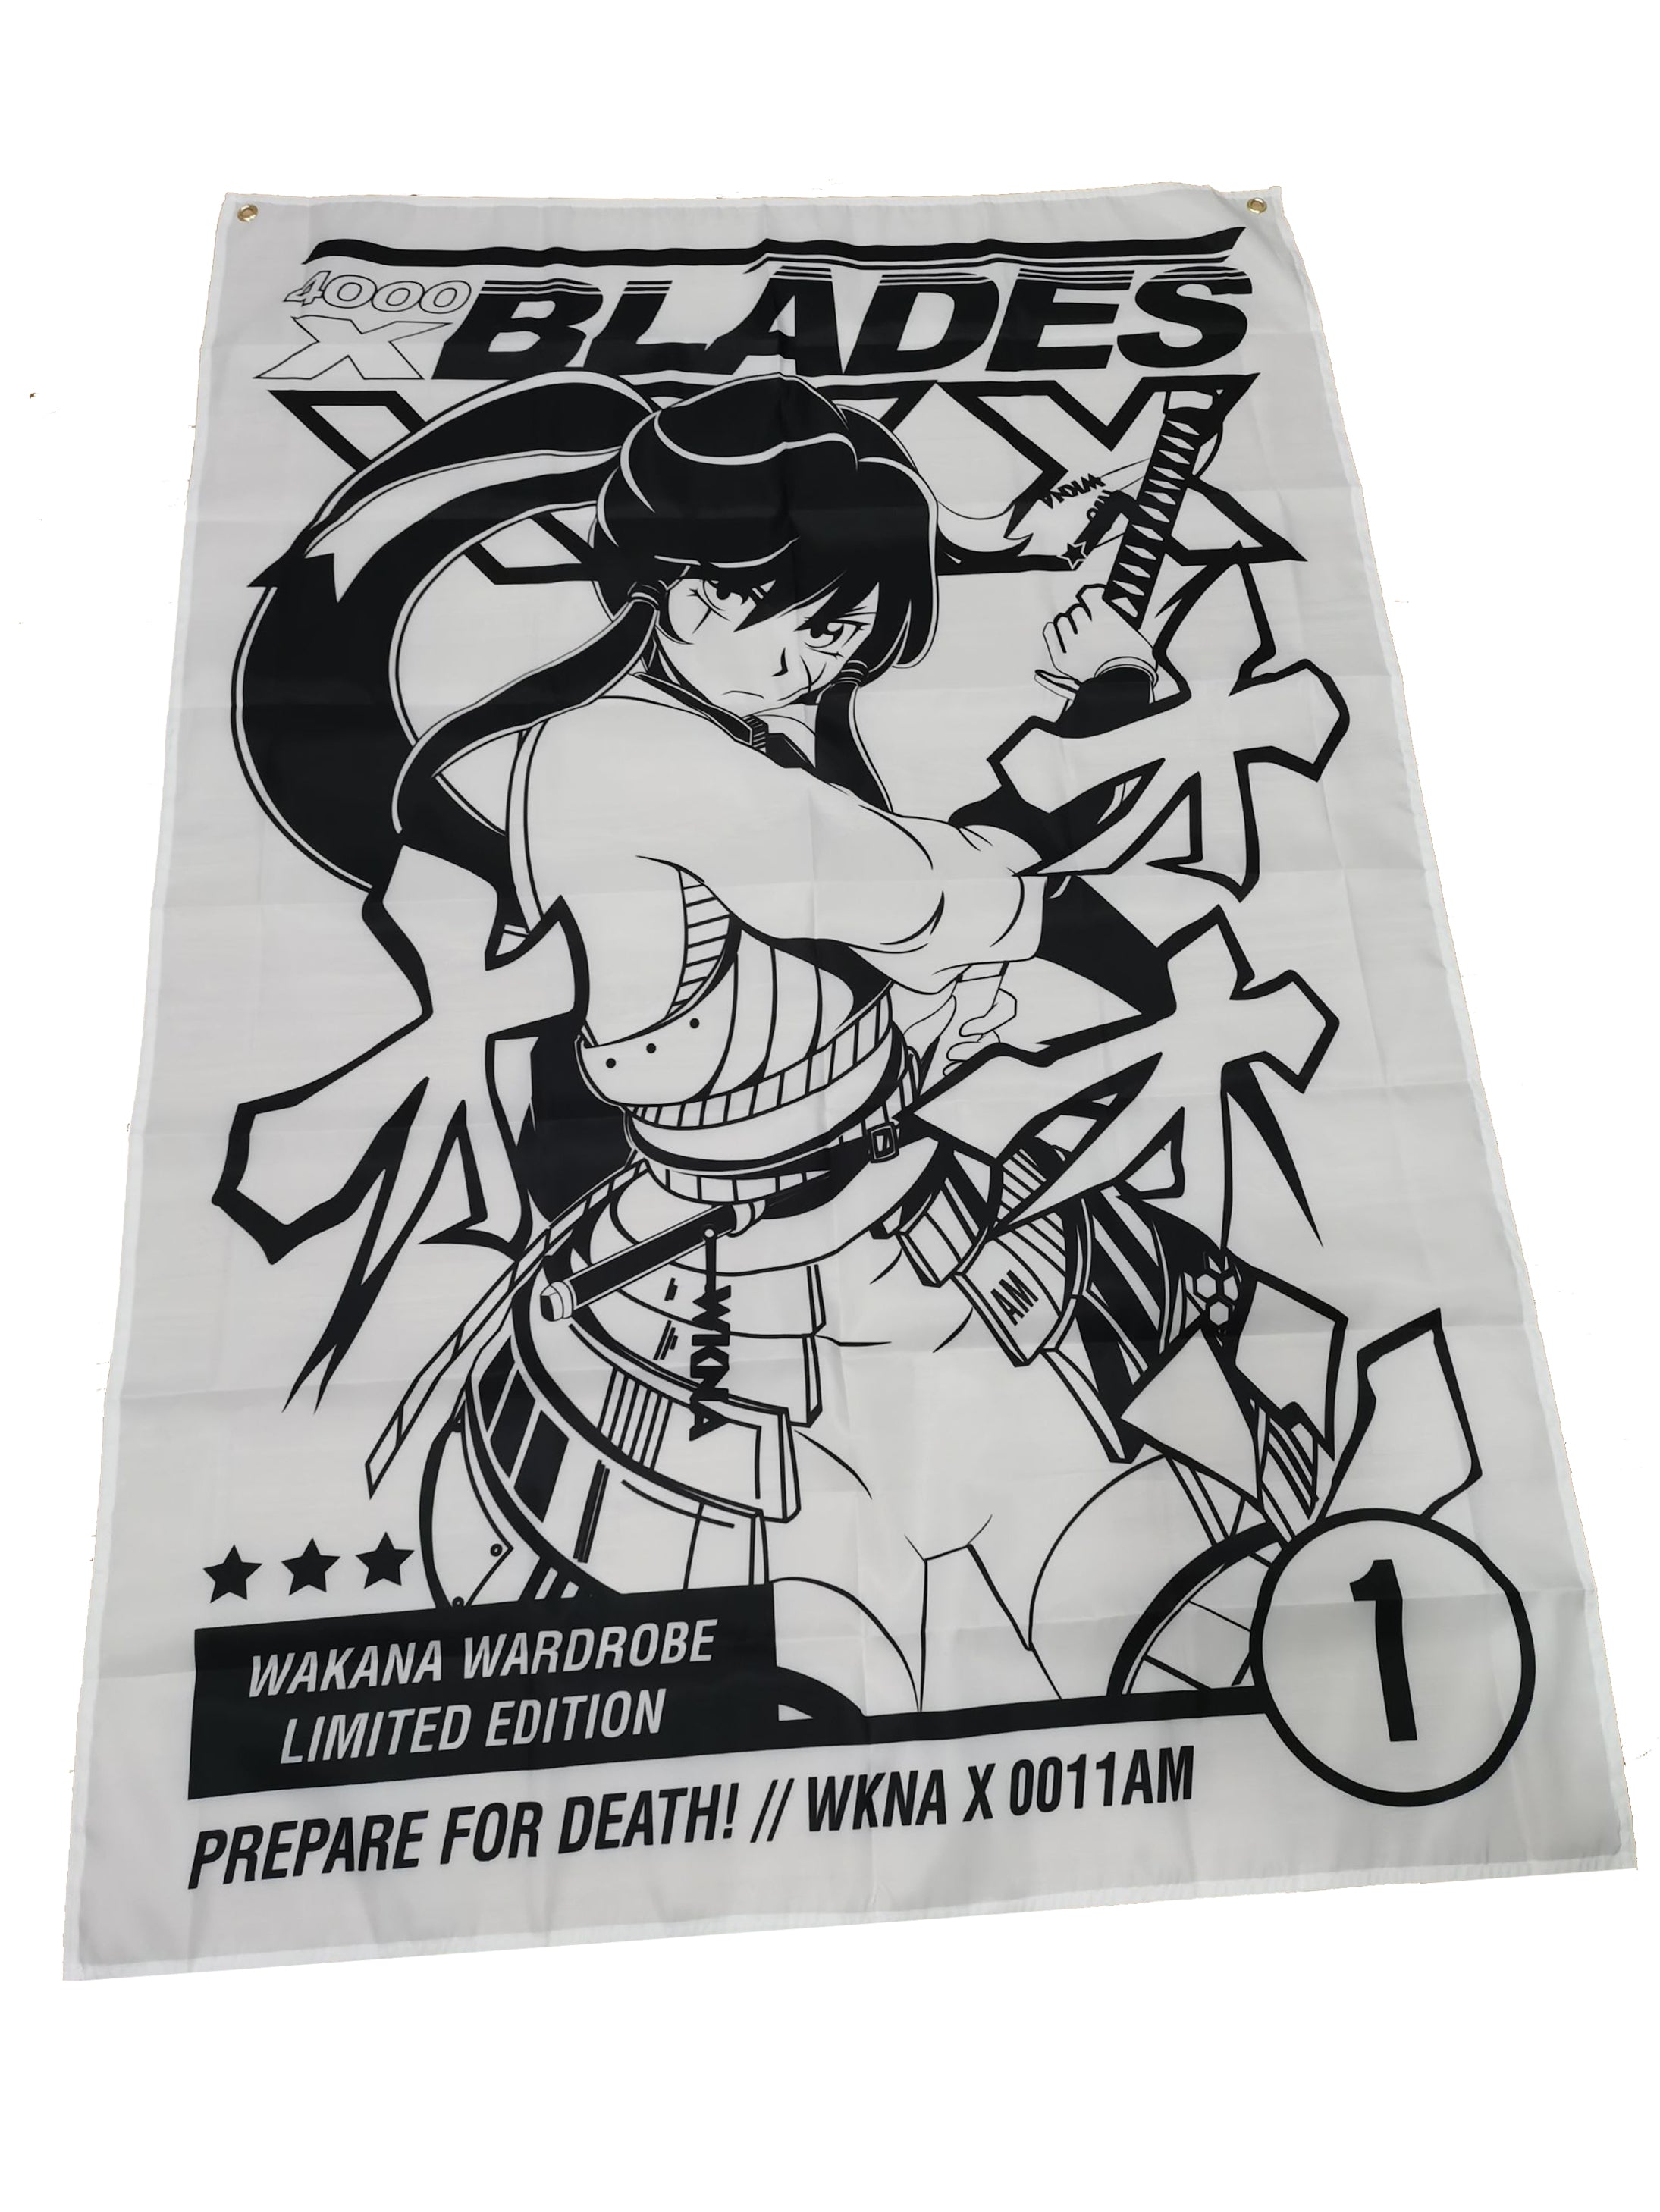 Wakana x 0011AM // 4000 Blades Manga Flag